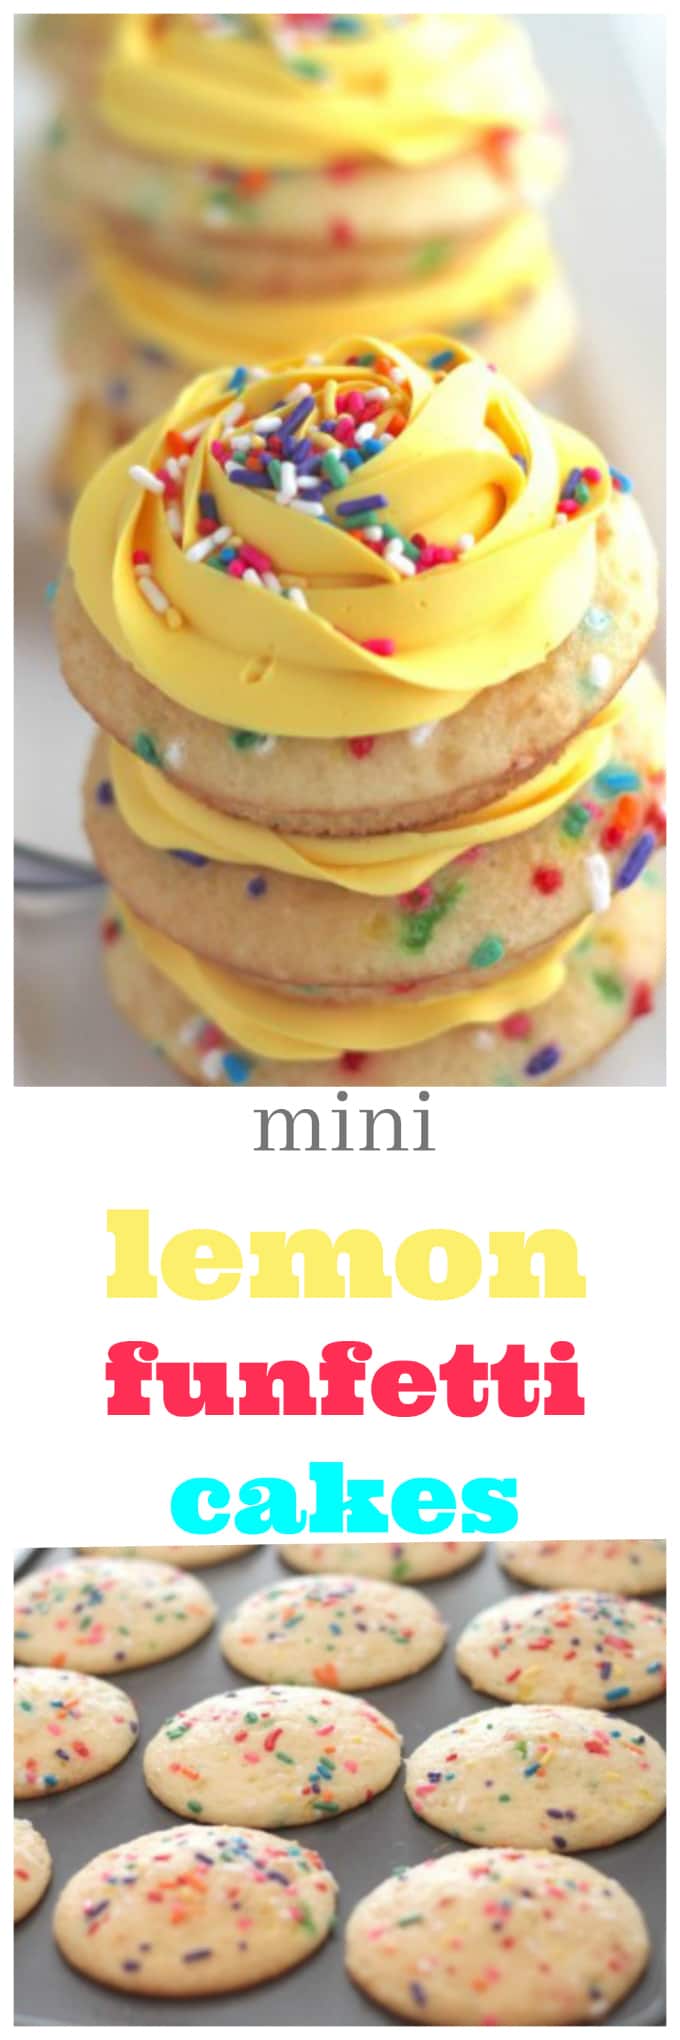 mini lemon funfetti cakes @createdbydiane